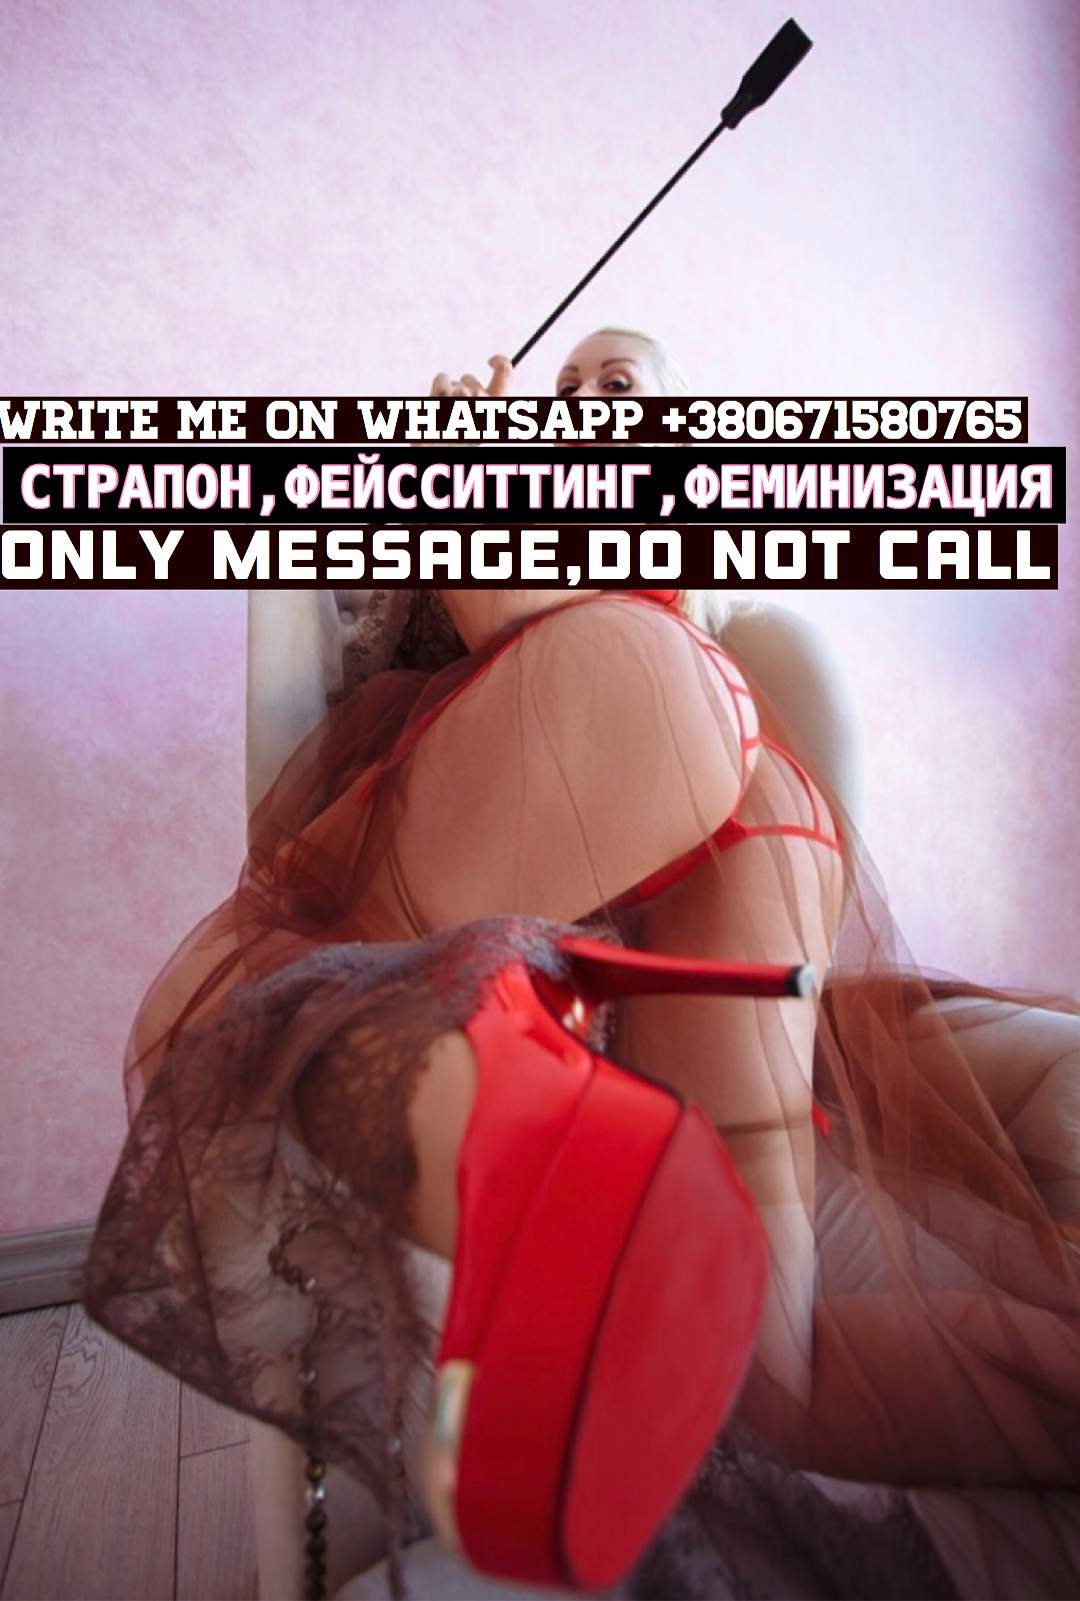 Проститутка Gospozha - Ulyana, фото 11, тел: 0671580765. Shevschenkov area - Киев